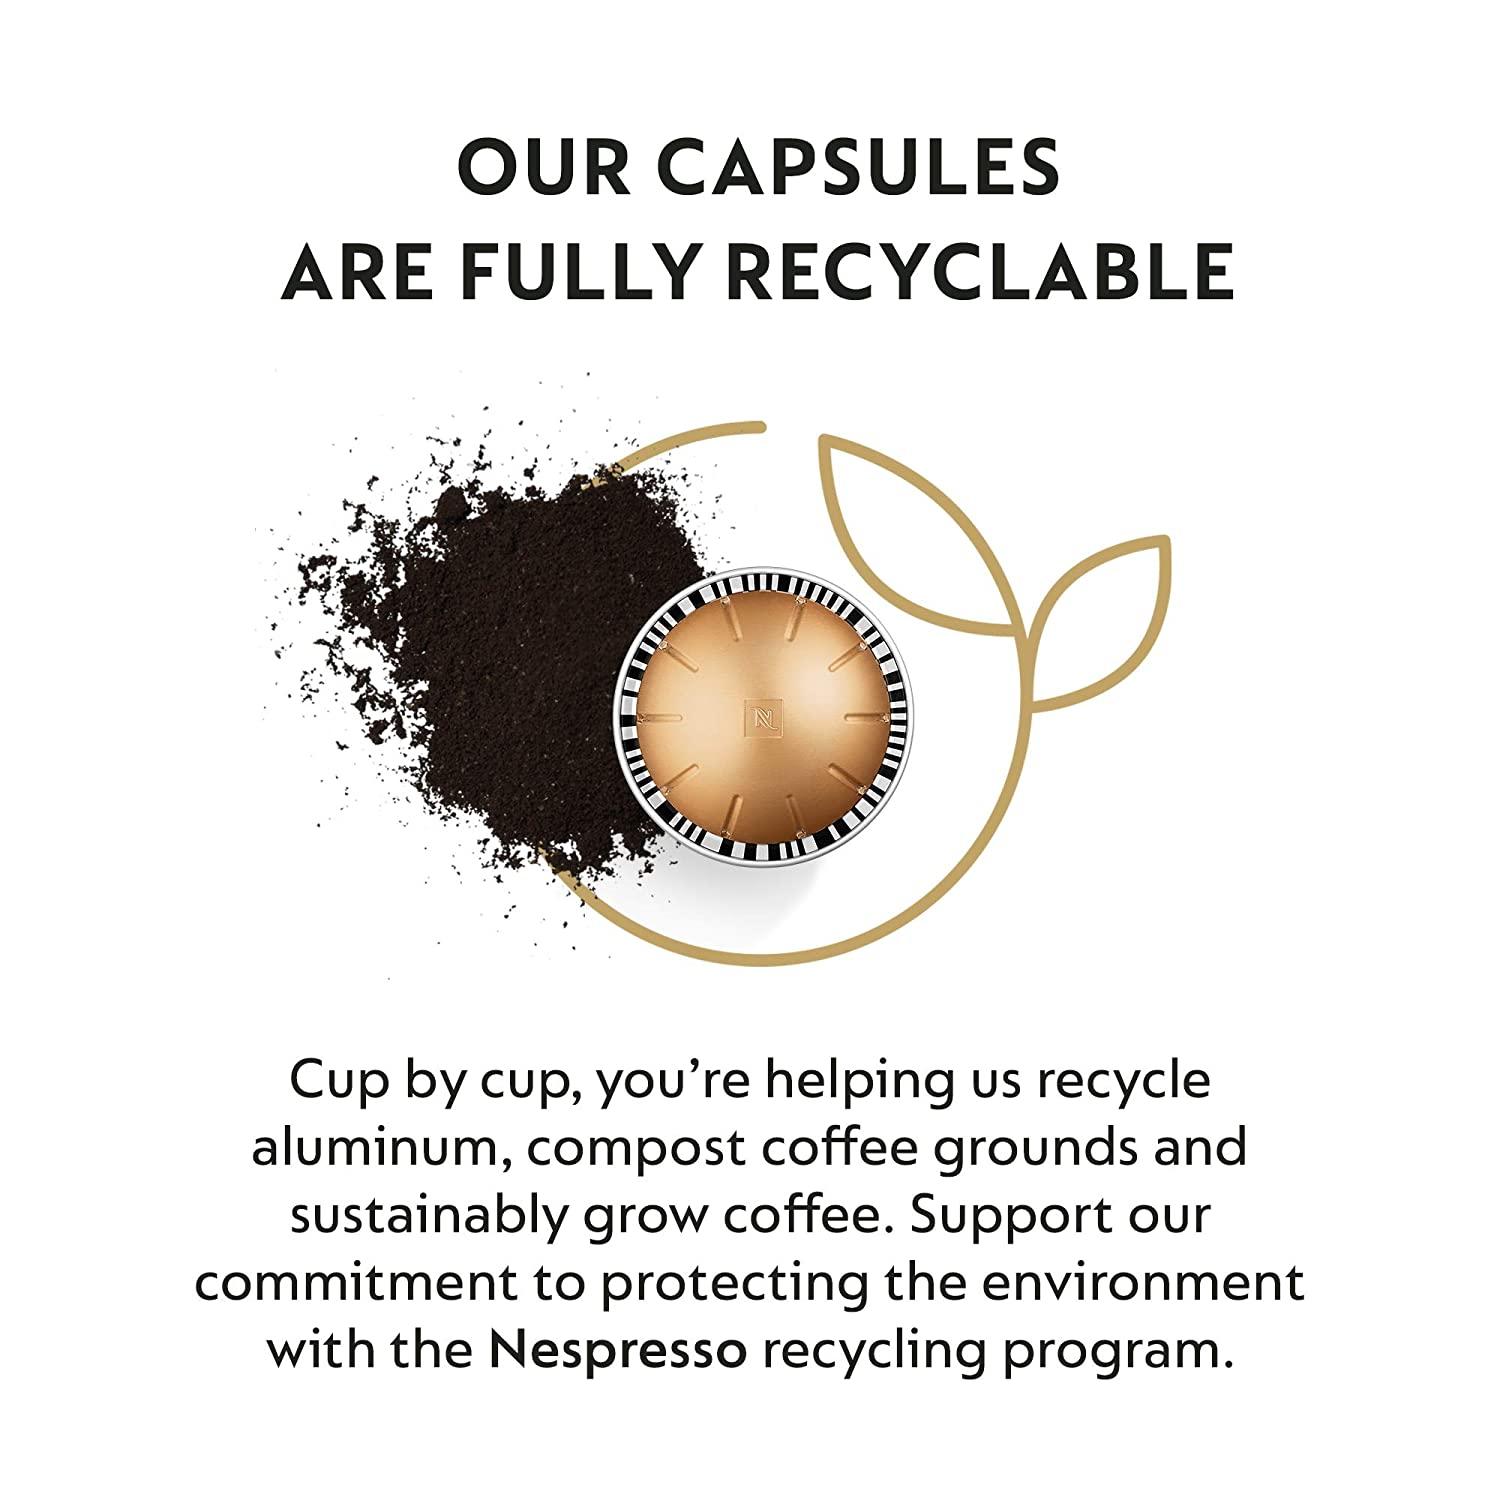 Nespresso Capsules VertuoLine, Melozio, Medium Roast Coffee, 30 Count Coffee Pods, Brews 7.8oz, Size: 7.8 oz